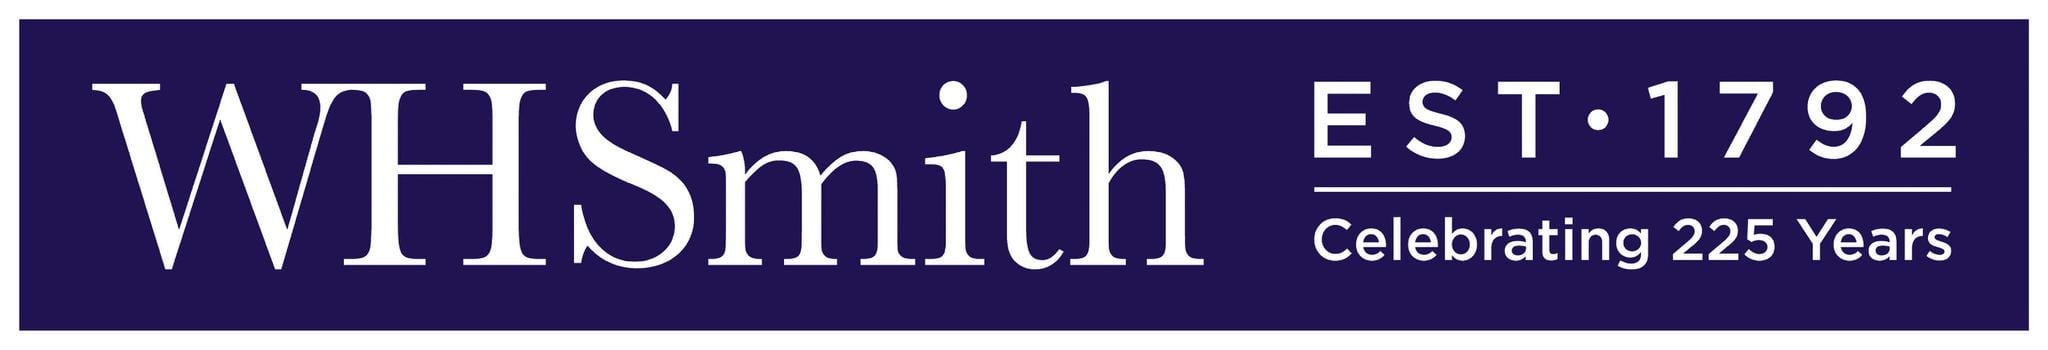 WHSmith Logo - Books By WHSmith. BBC Good Food Show